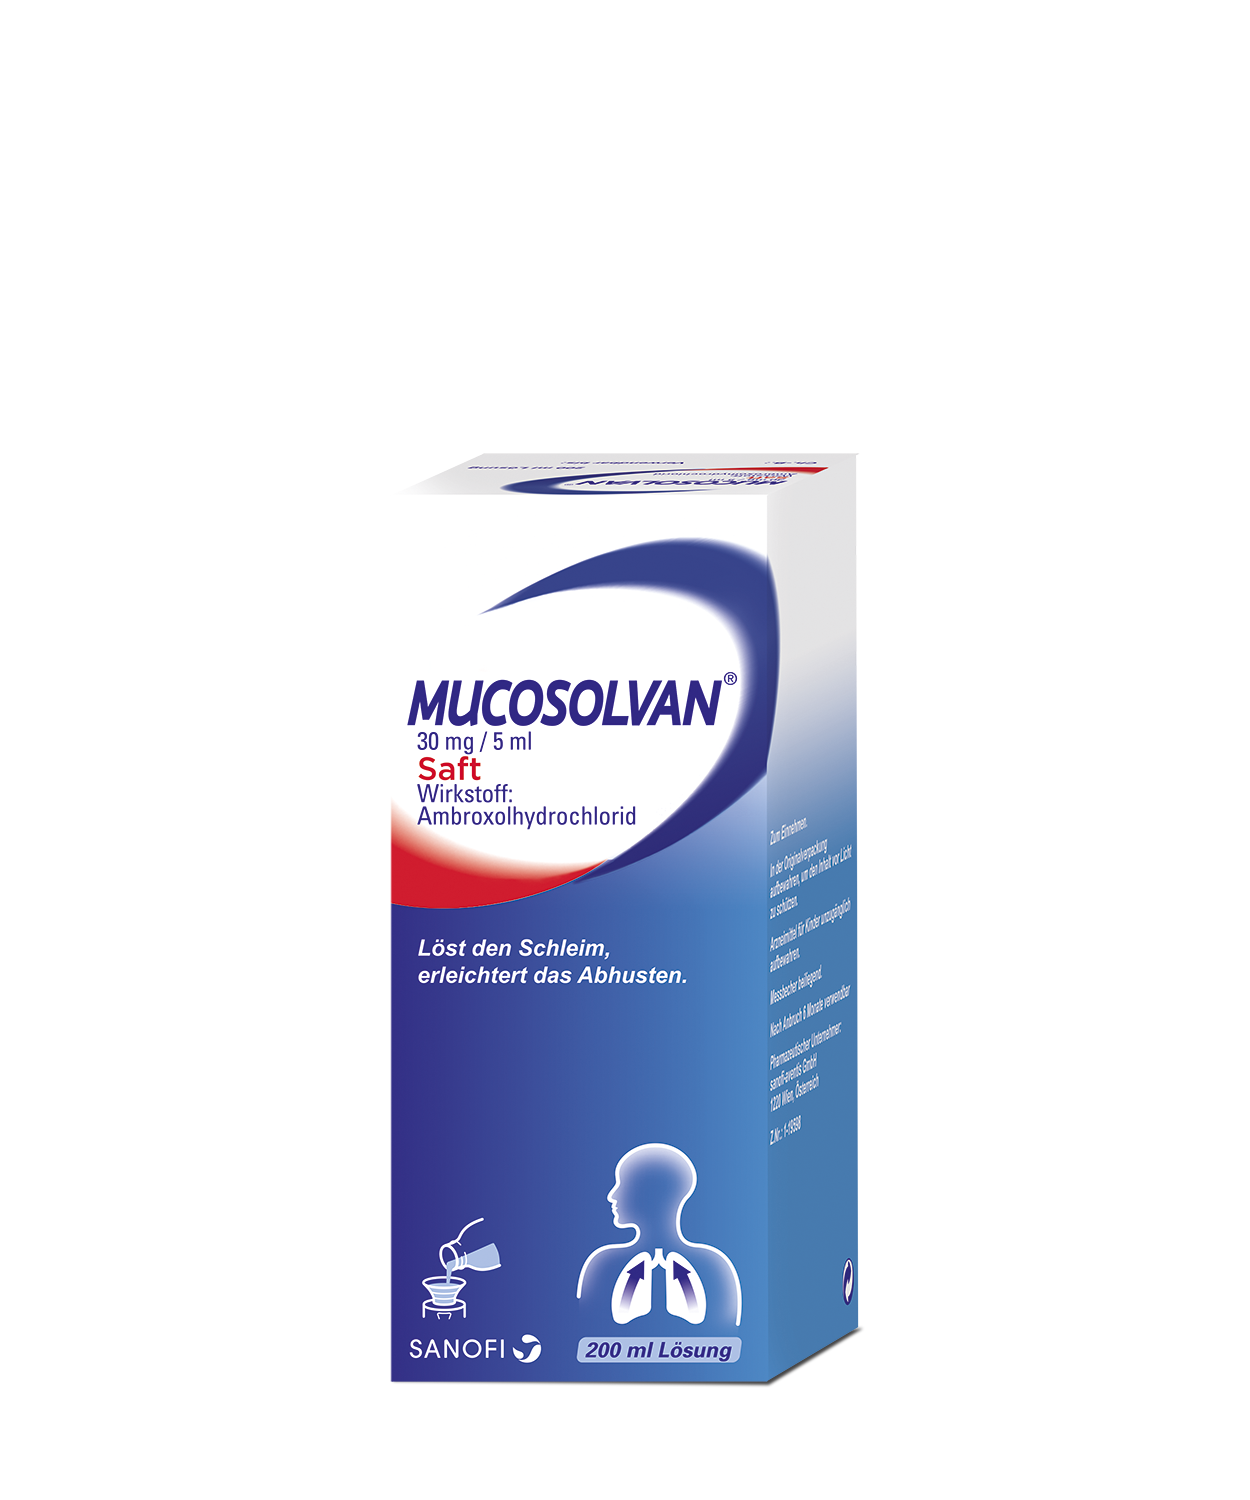 Abbildung Mucosolvan 30 mg/5 ml - Saft